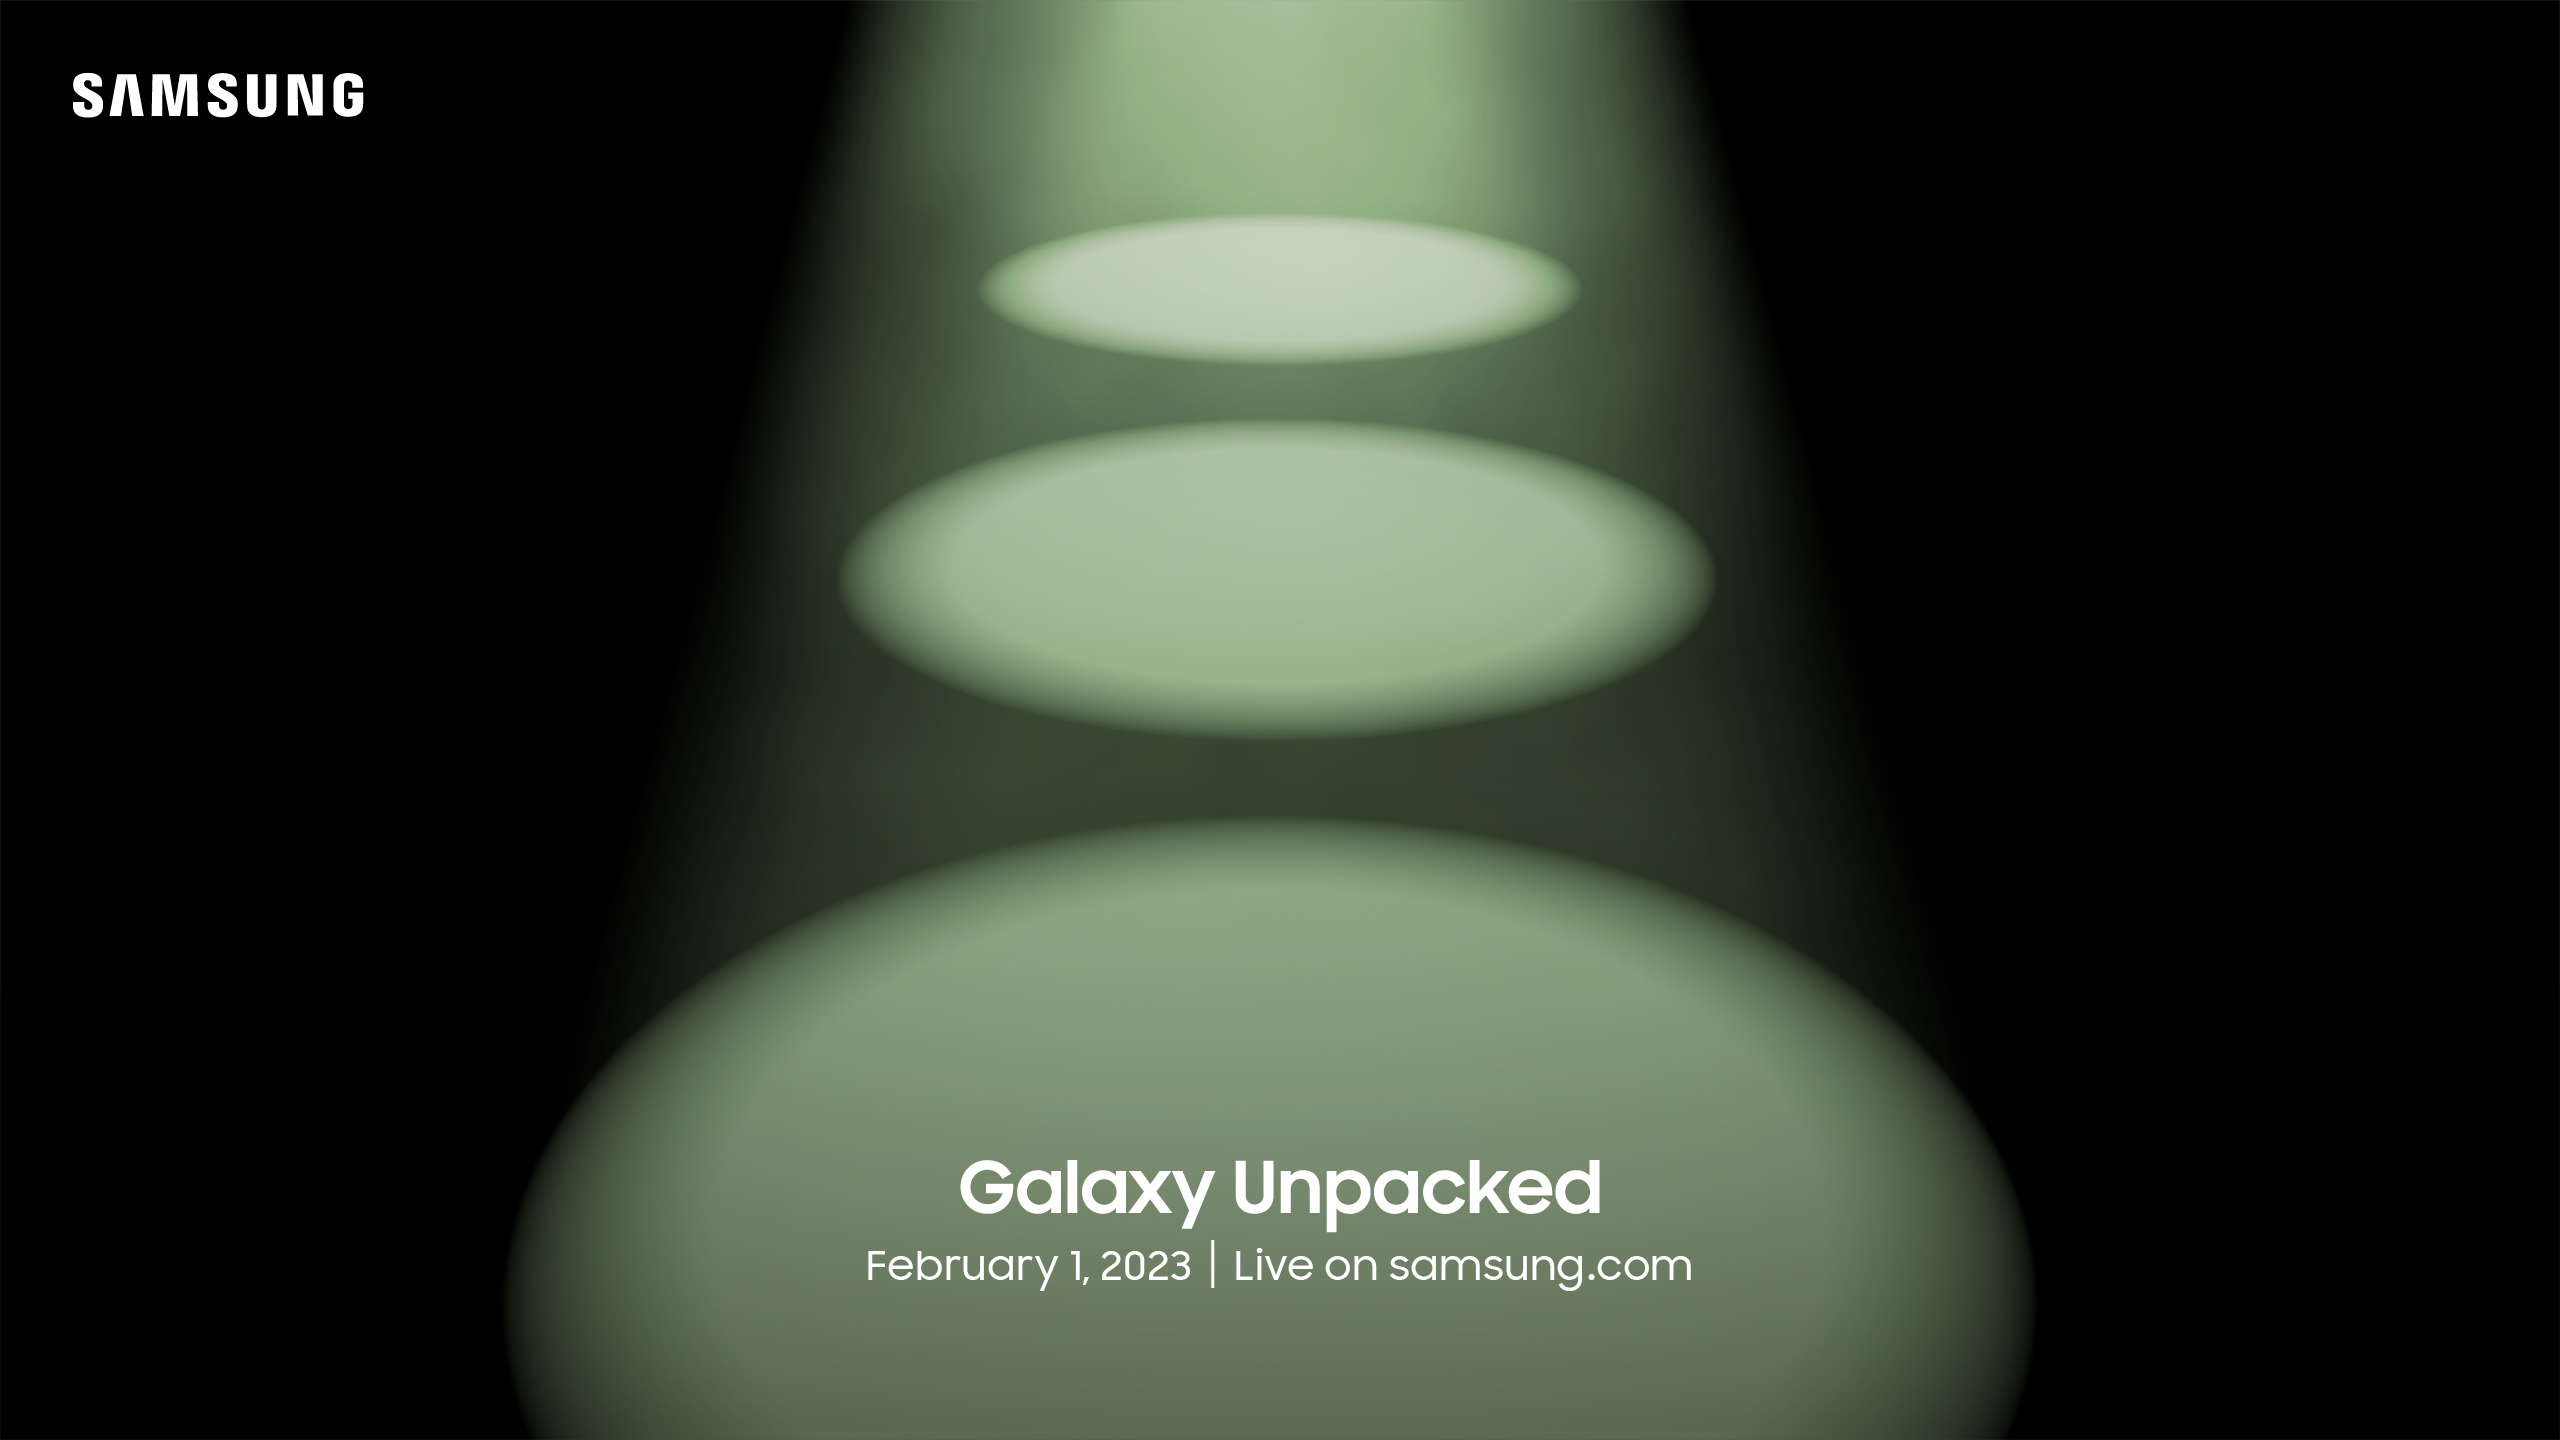 Samsung Galaxy Unpacked invitation showing three lit circles on a dark background